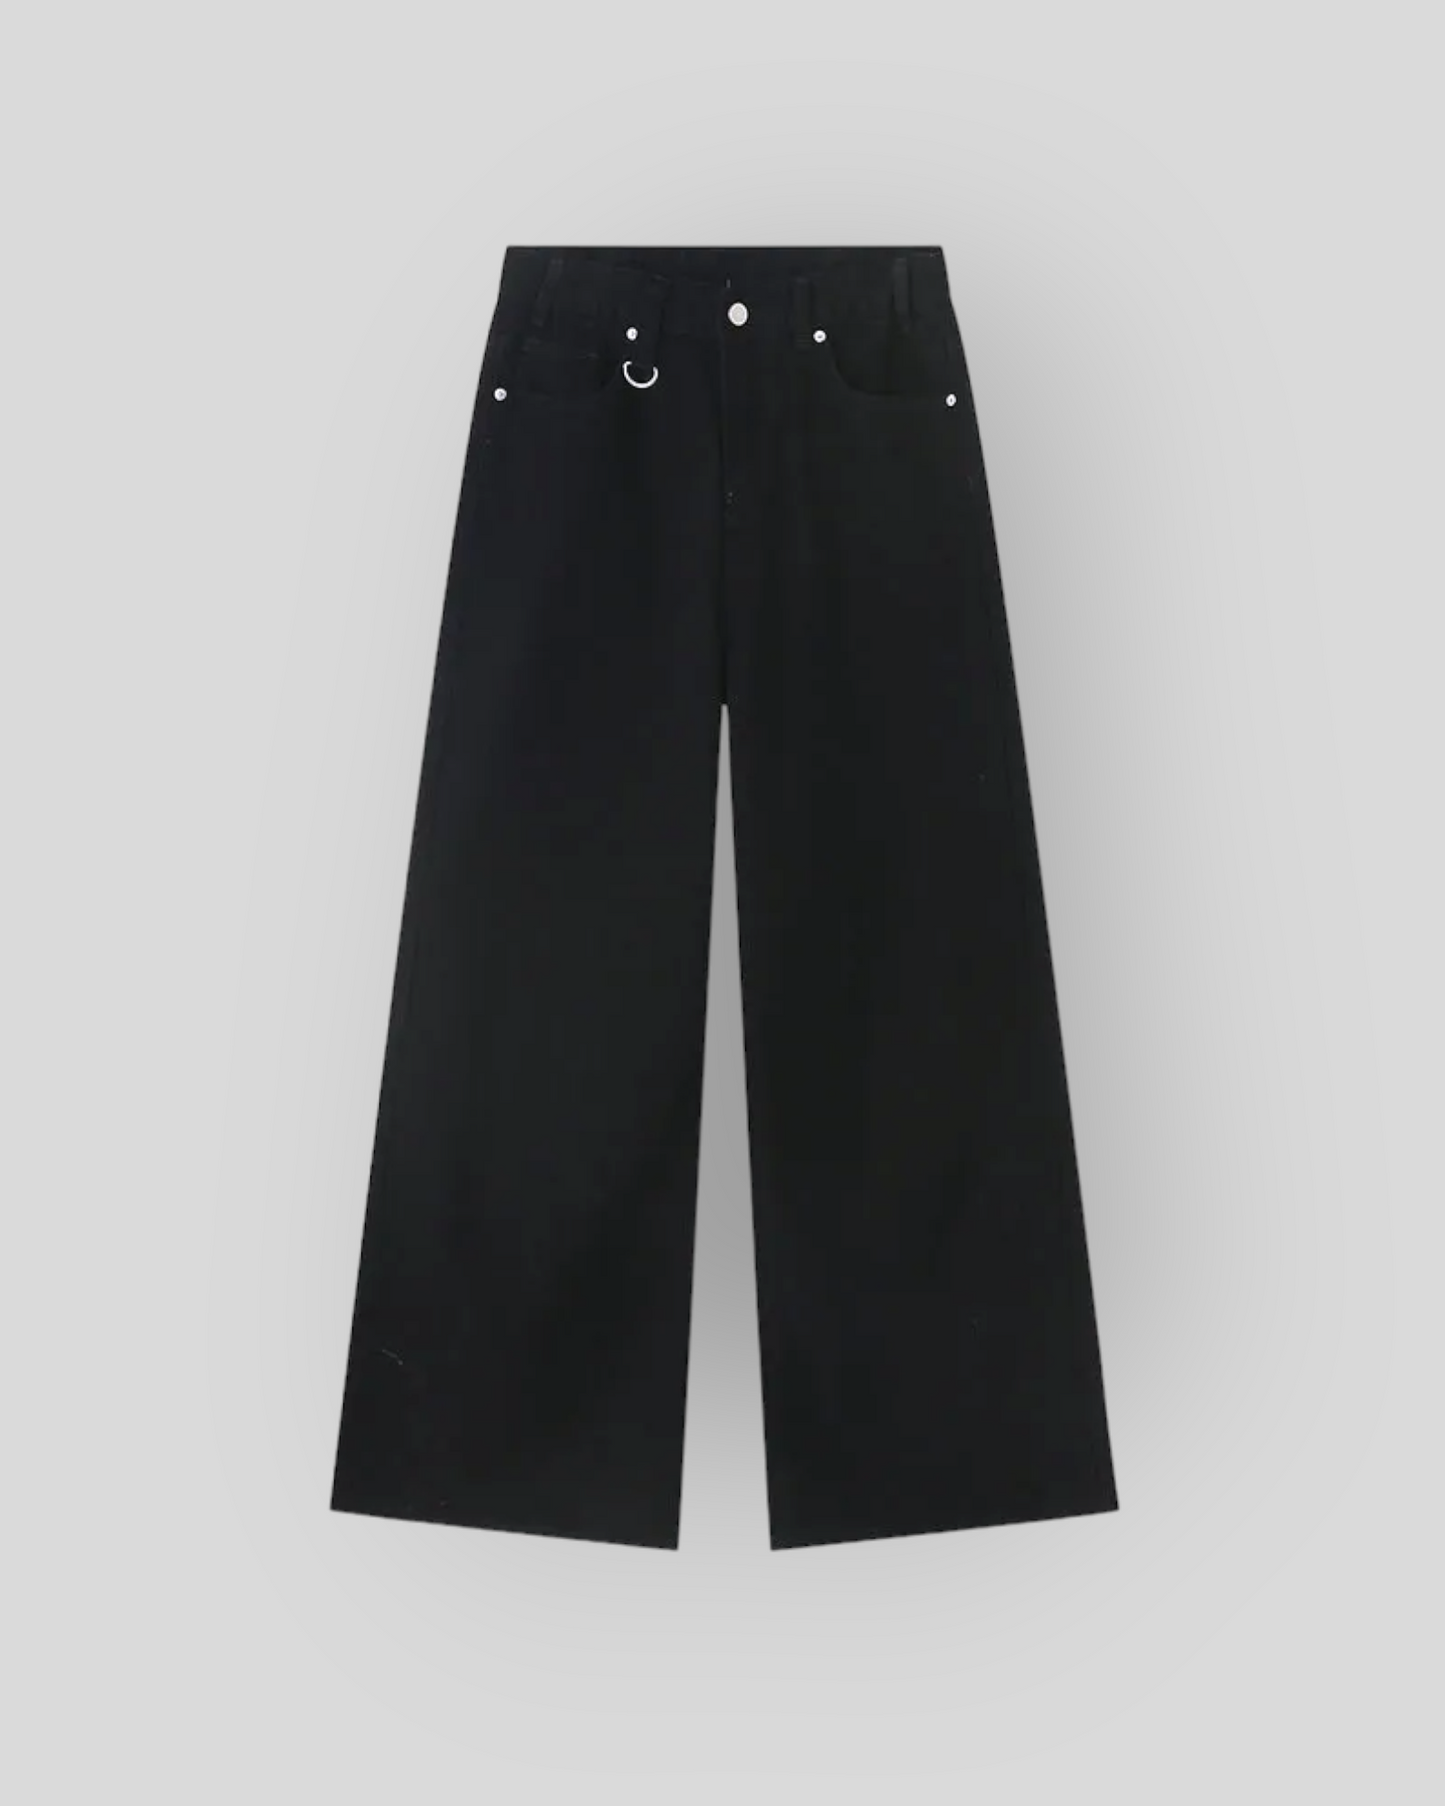 Men's Vintage Streetwear Baggy Denim Jeans, Trousers.